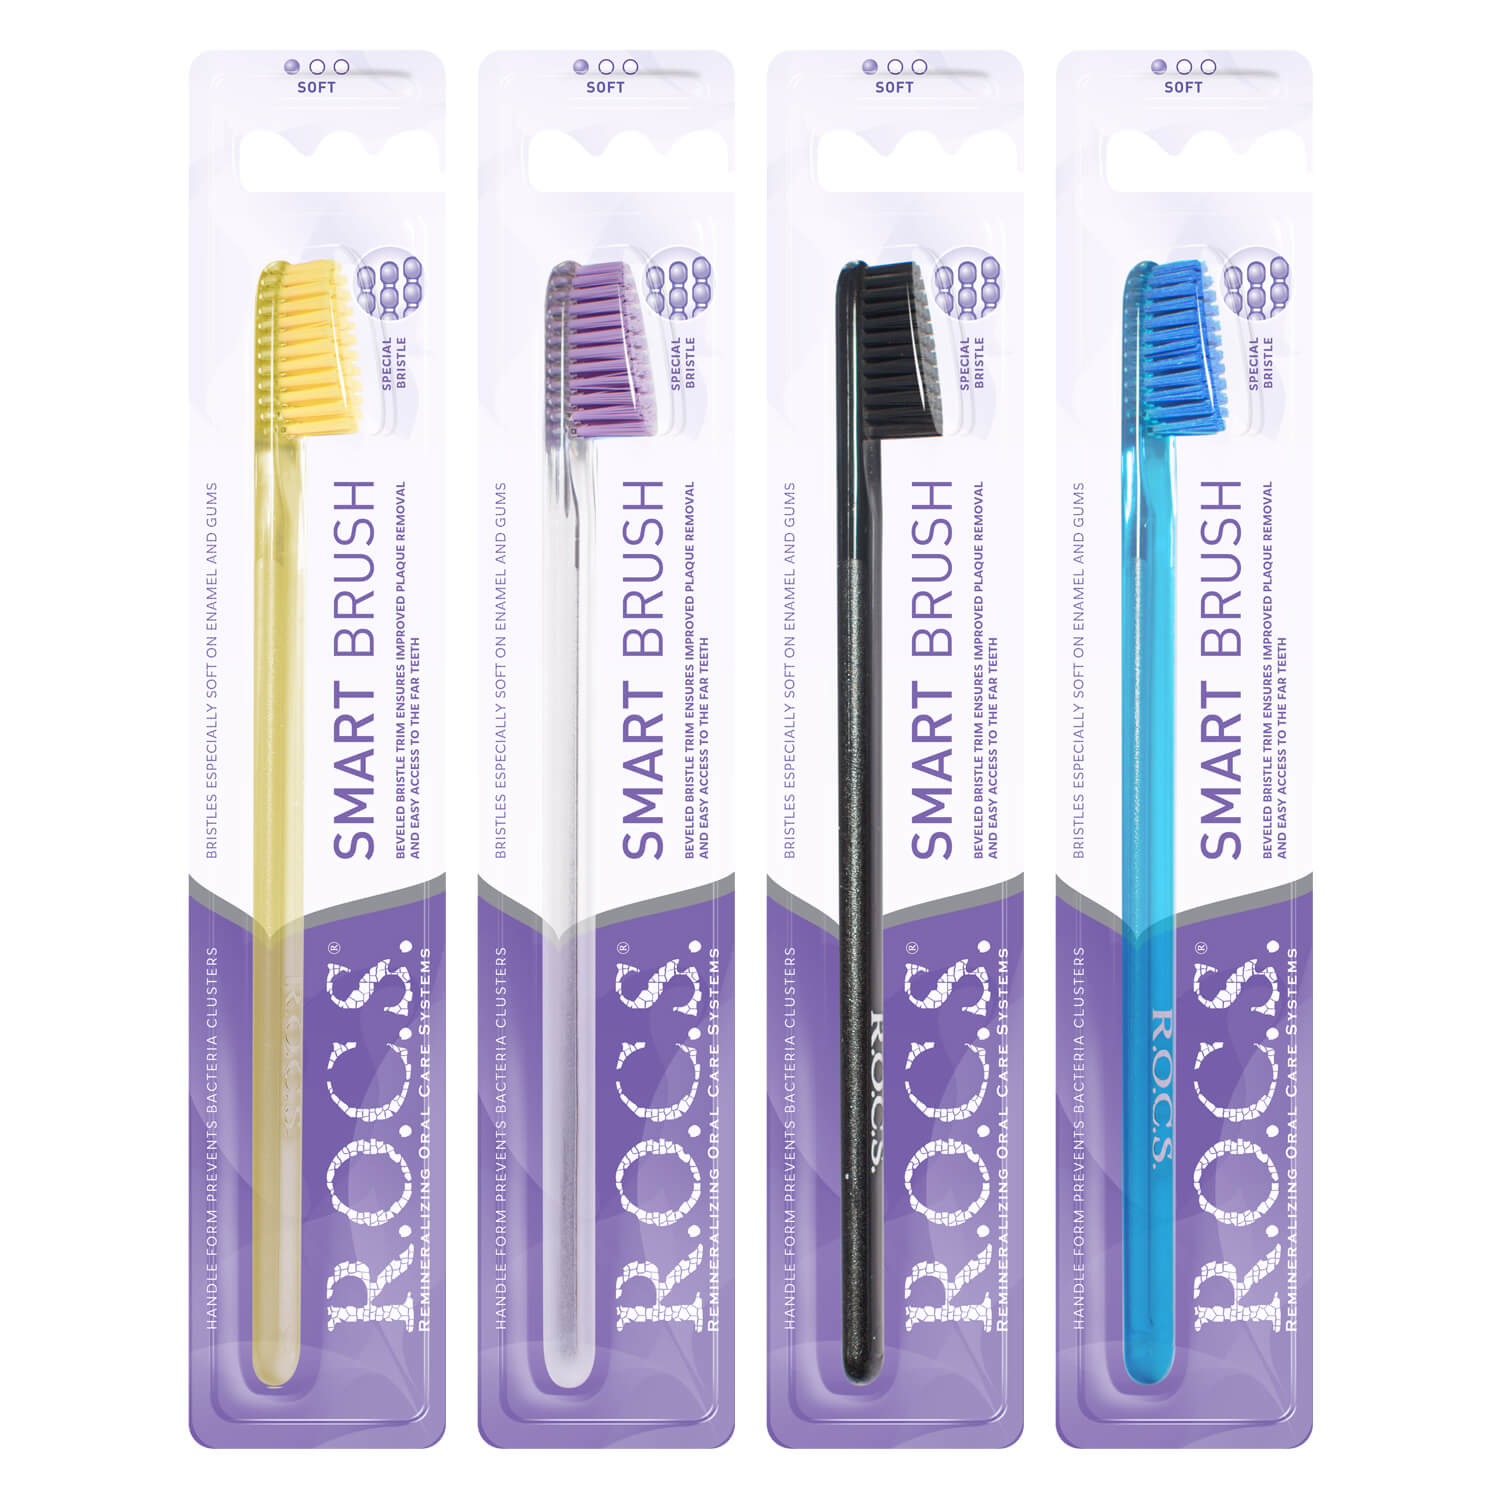 Toothbrush R.O.C.S.® Classic Soft - R.O.C.S.